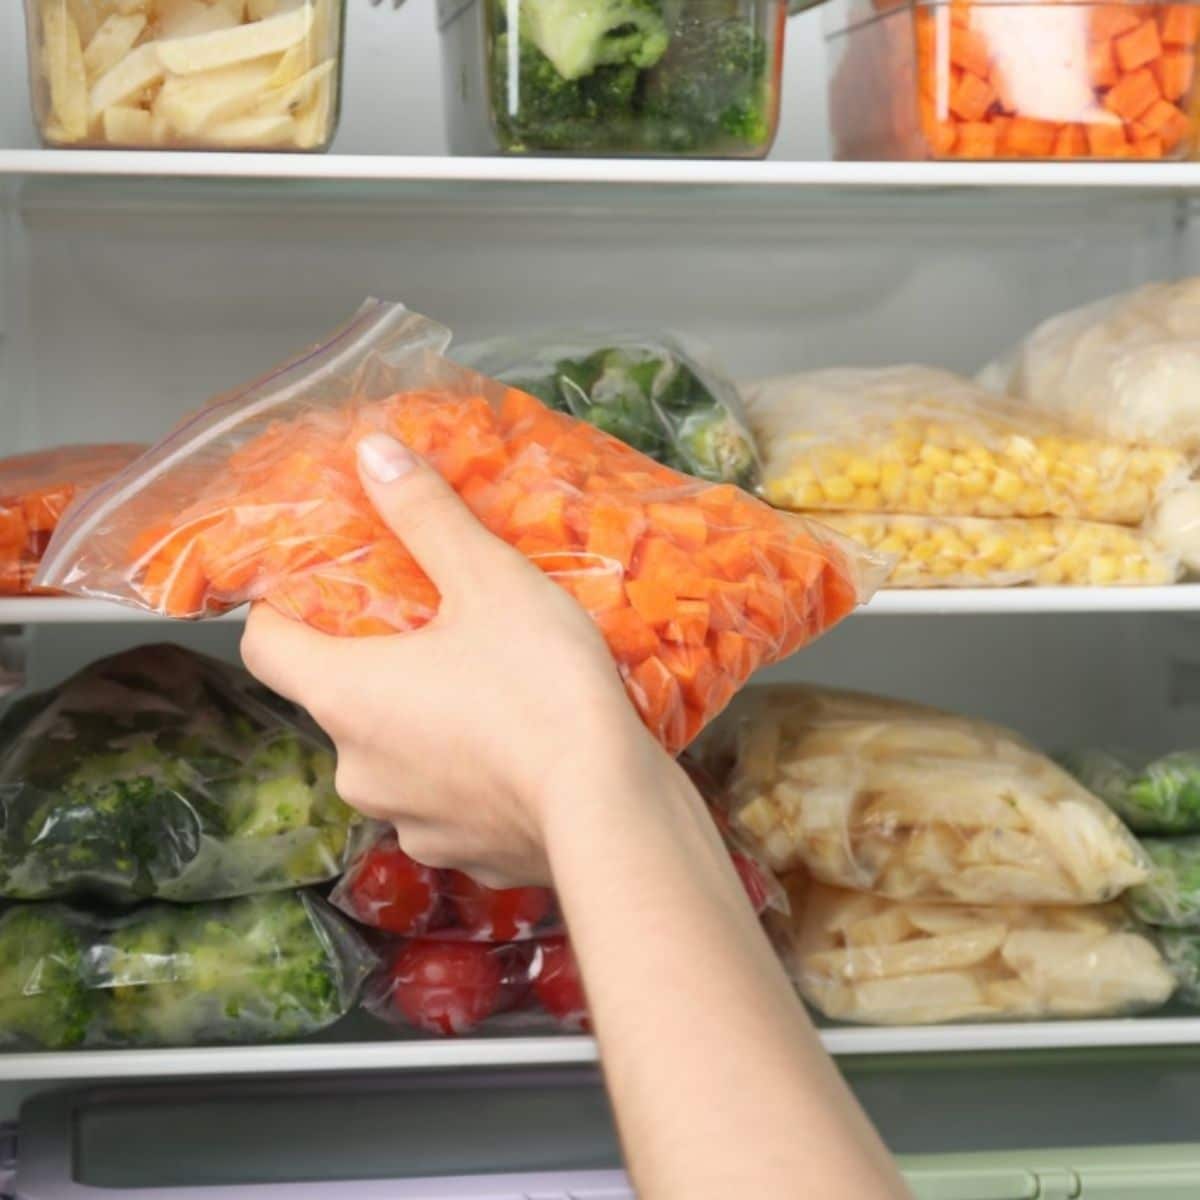 Save on Food Lion Freezer Bags Reclosable Quart Size Order Online